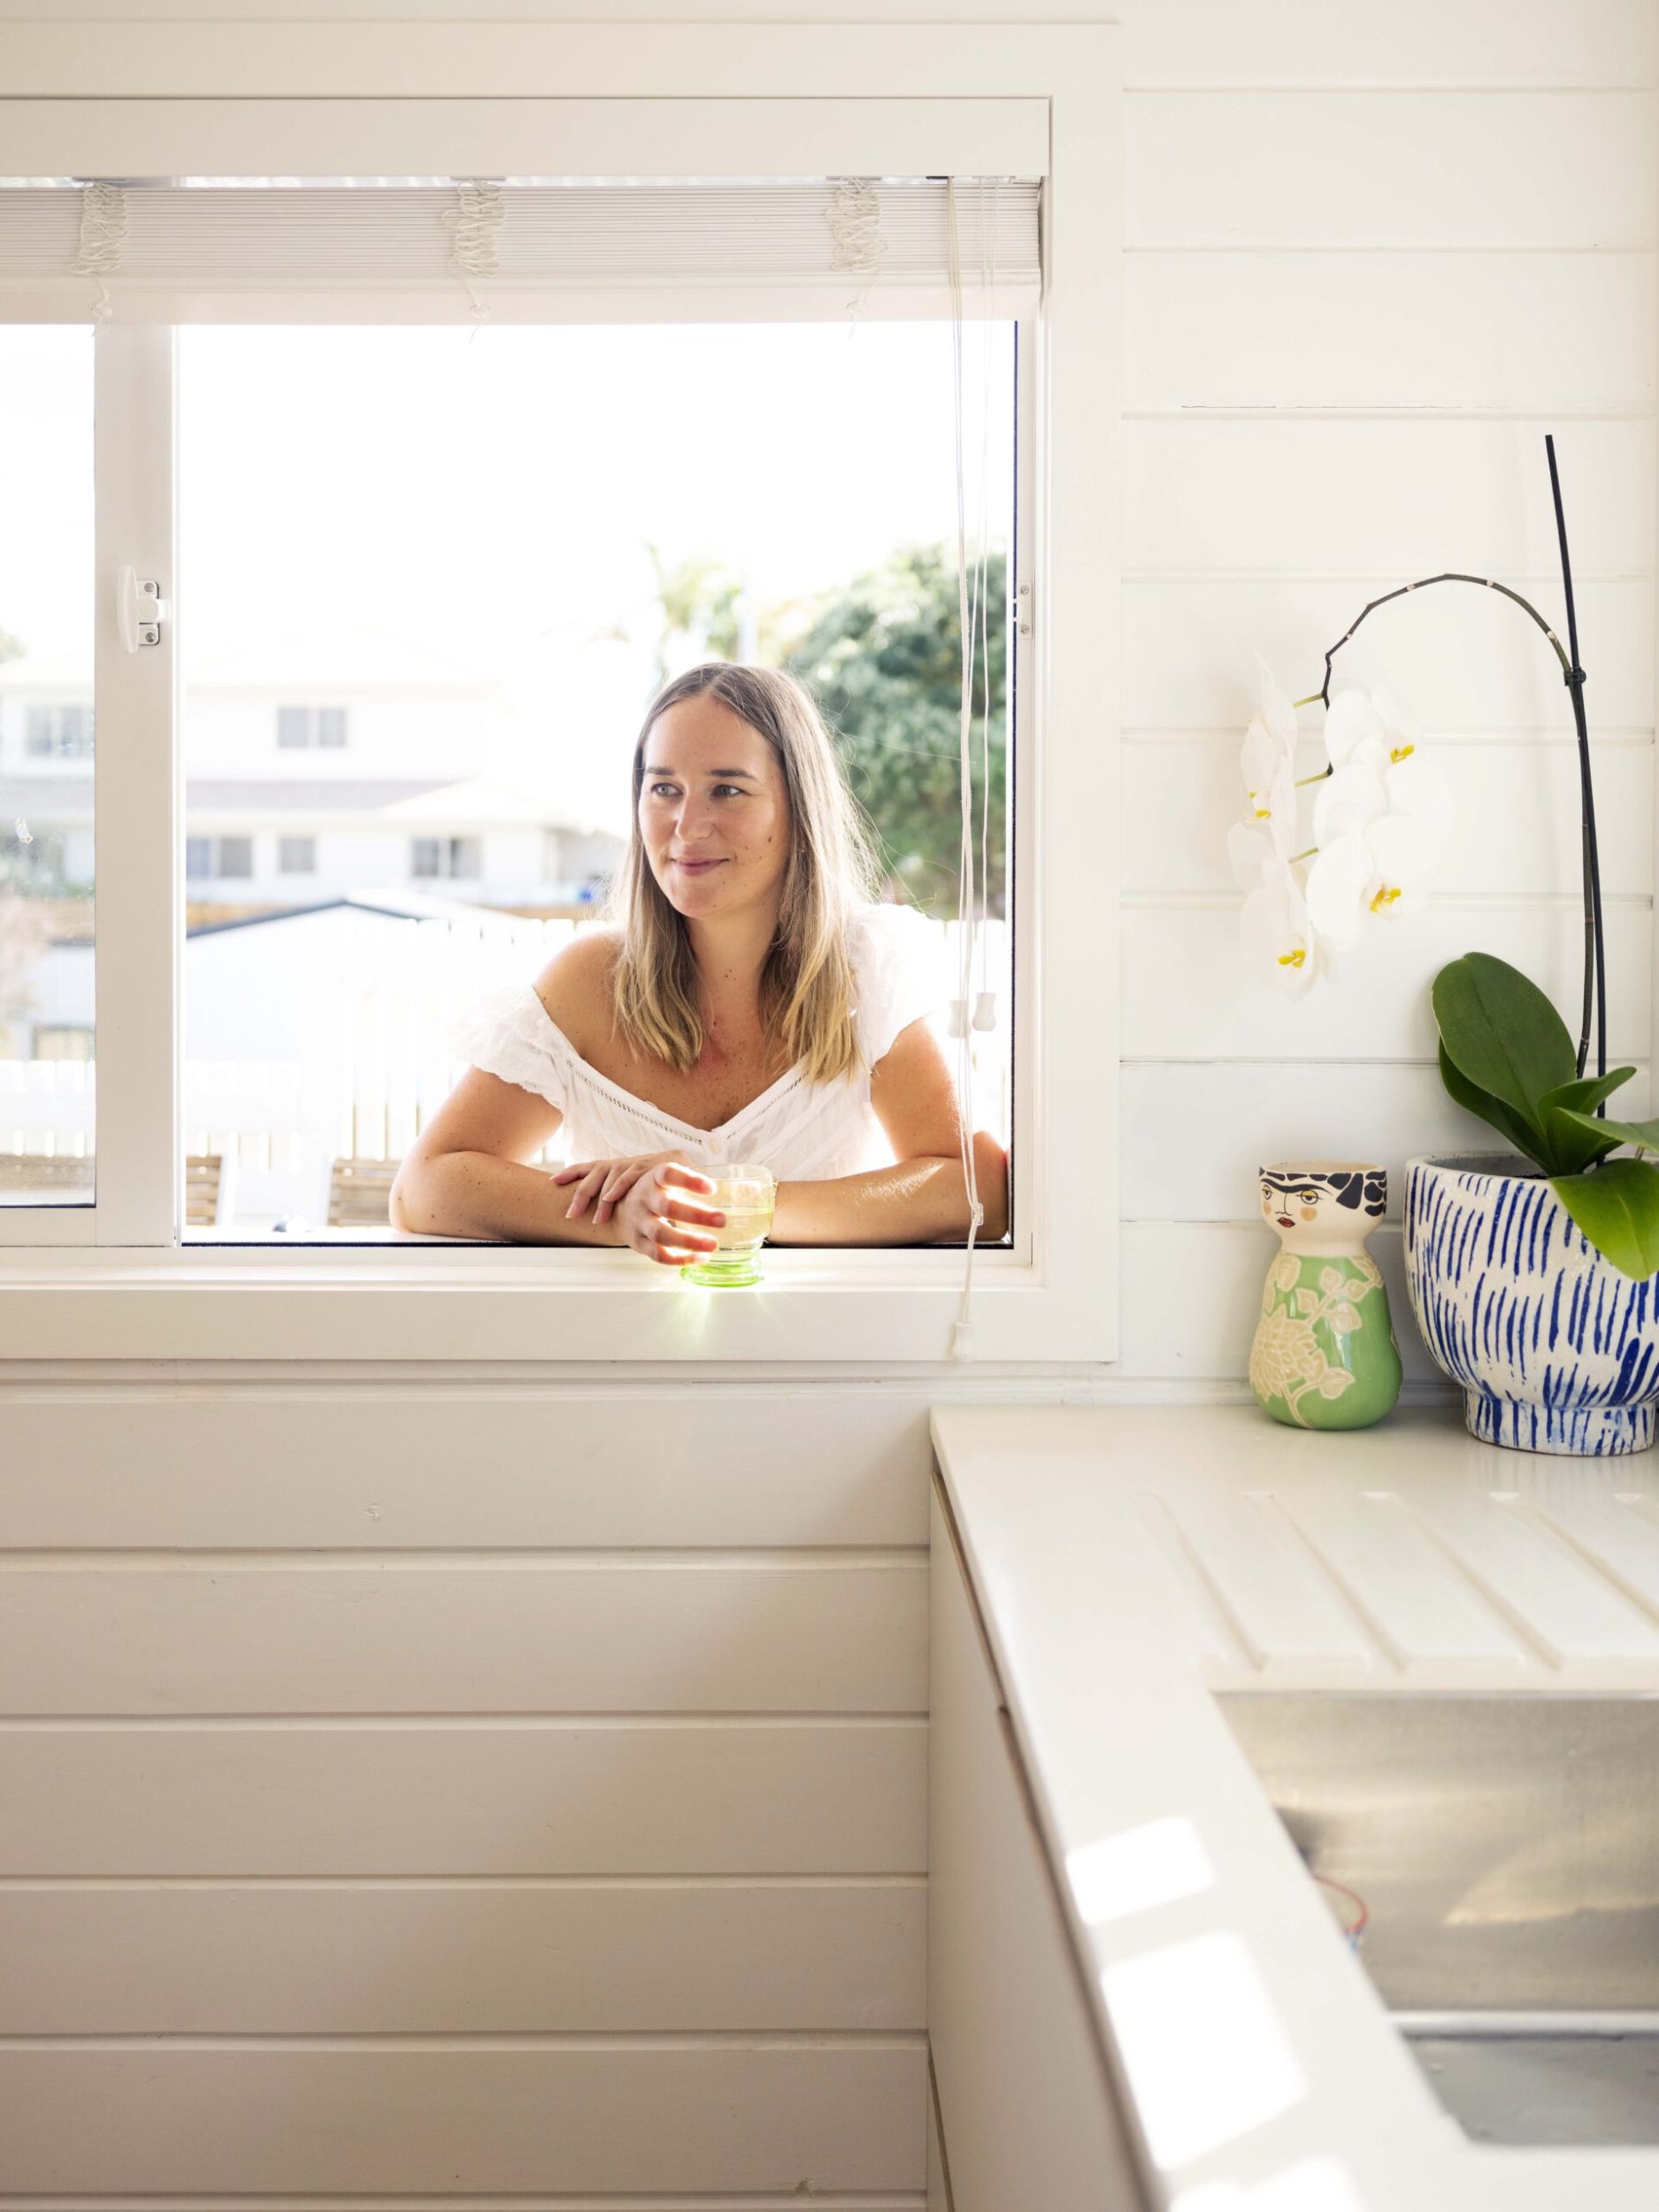 Renée Reichmuth standing at kitchen window holding green glass